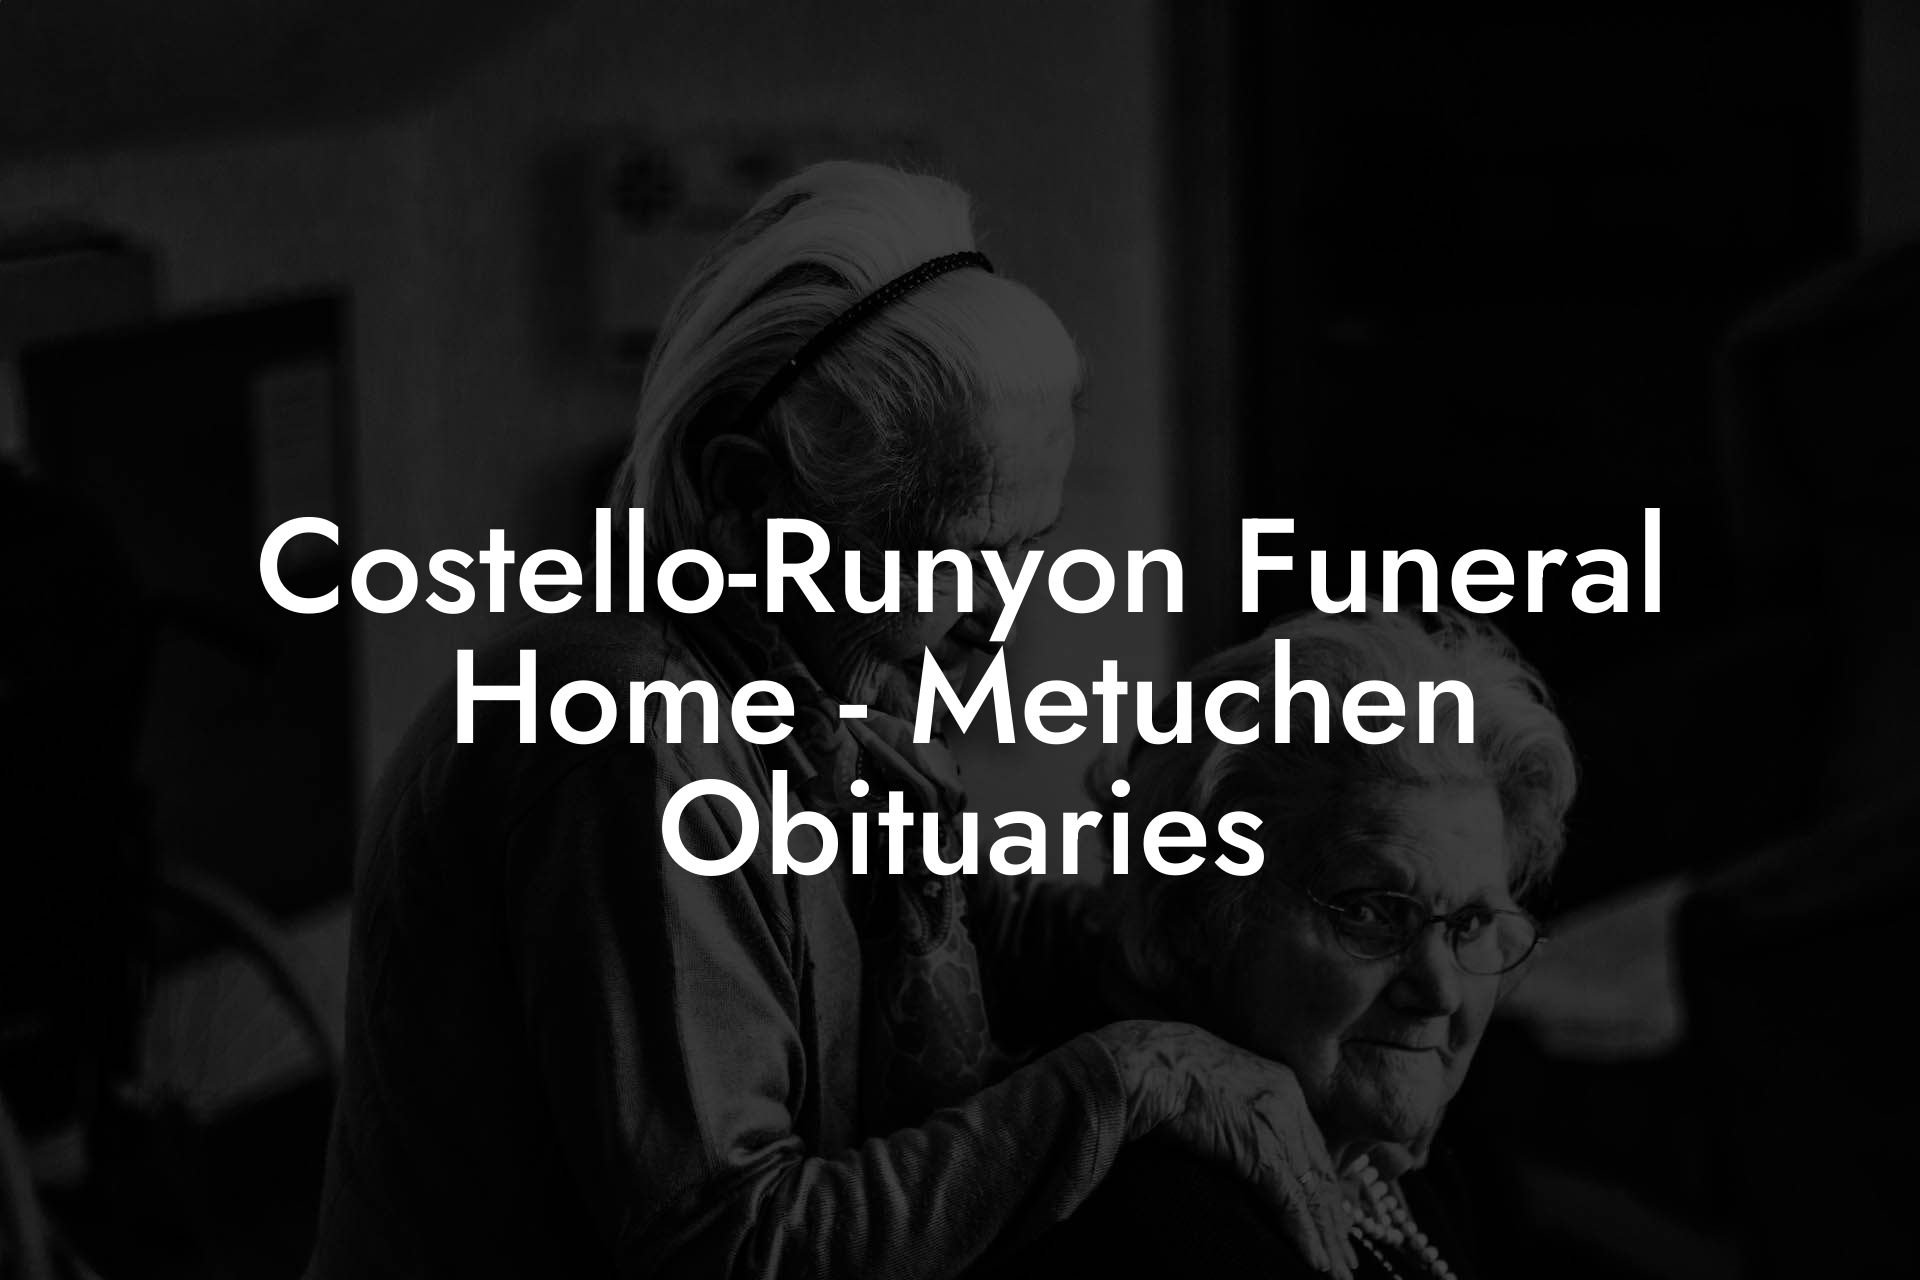 Costello-Runyon Funeral Home - Metuchen Obituaries